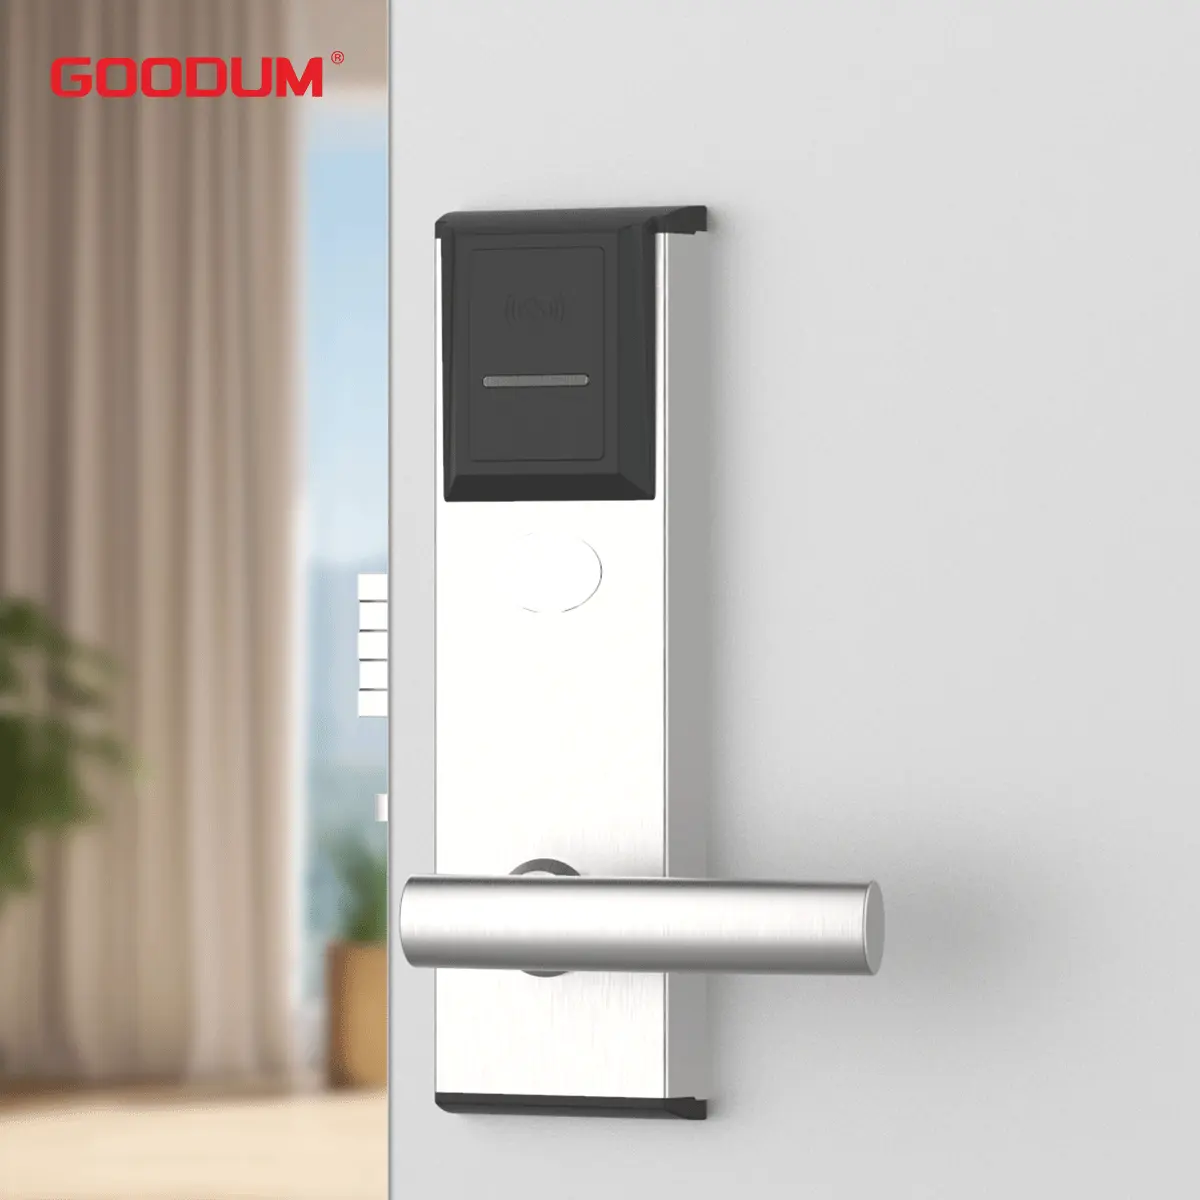 Goodum 스마트 오피스 보안 RFID 키 카드 호텔 및 비즈니스 용 목재 도어 용 열쇠가없는 키 실린더가 포함 된 디지털 도어 잠금 장치